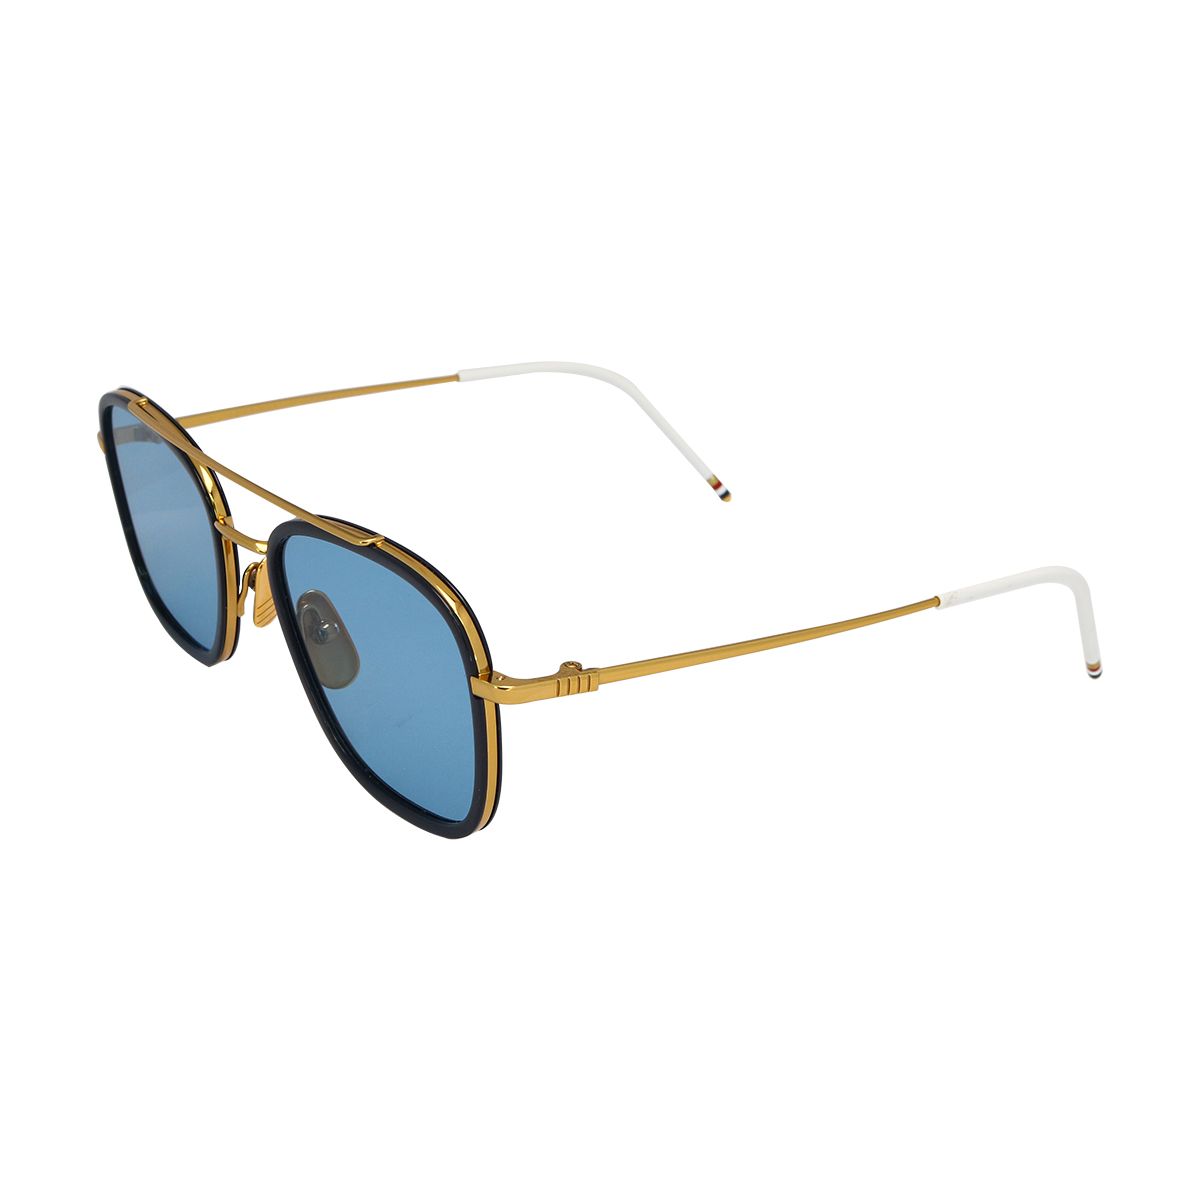 800 Square Sunglasses B - size 51